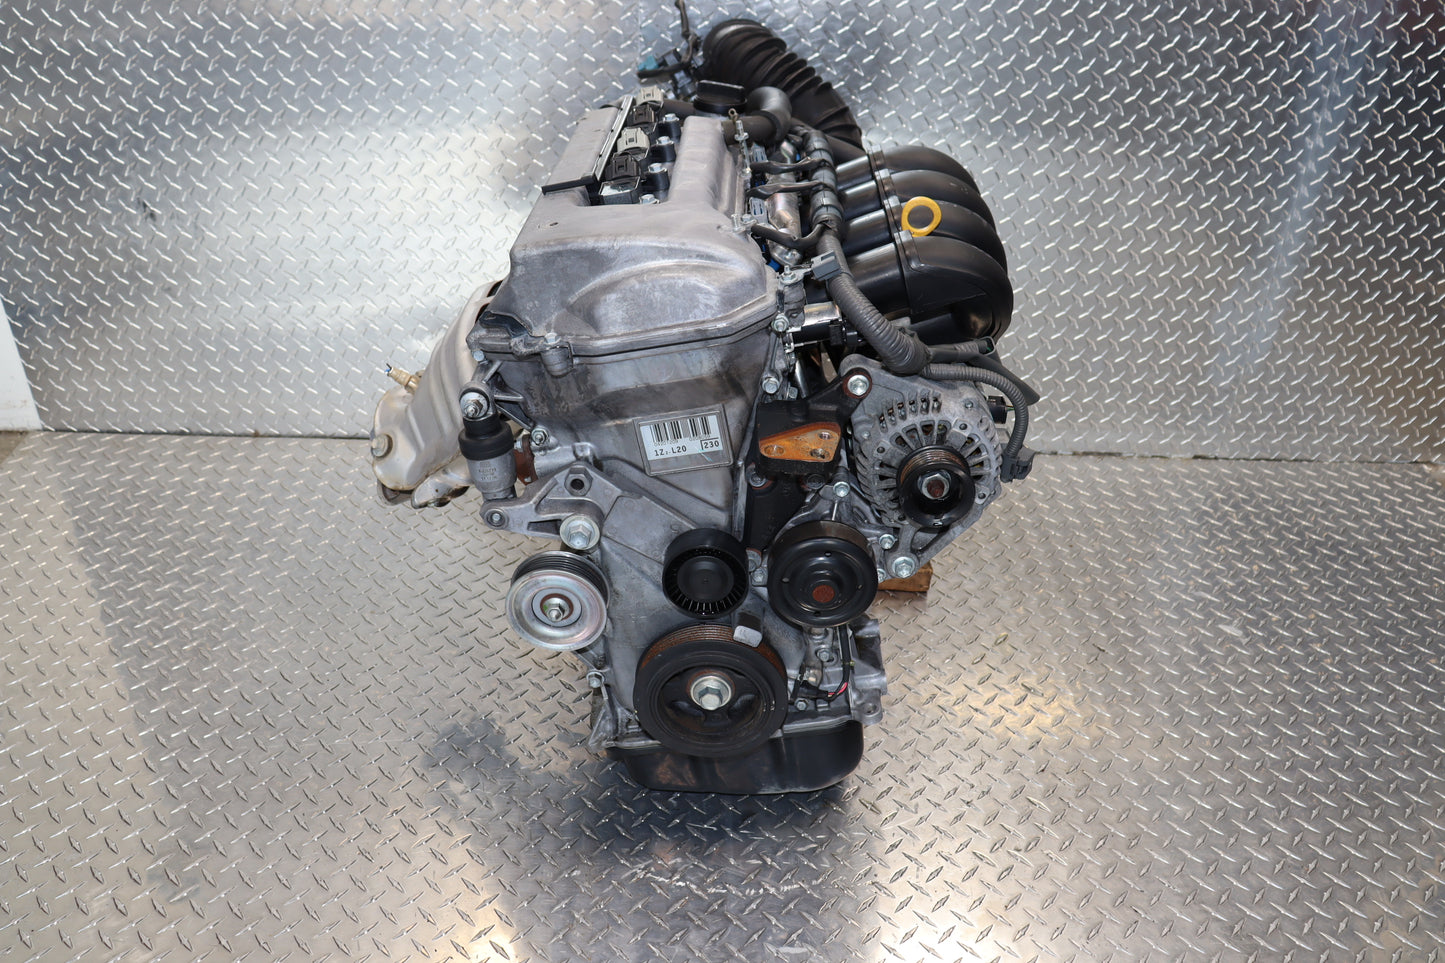 JDM 1ZZ-FE 2000 - 2005 TOYOTA CELICA GT MOTOR 1.8L VVTI ENGINE